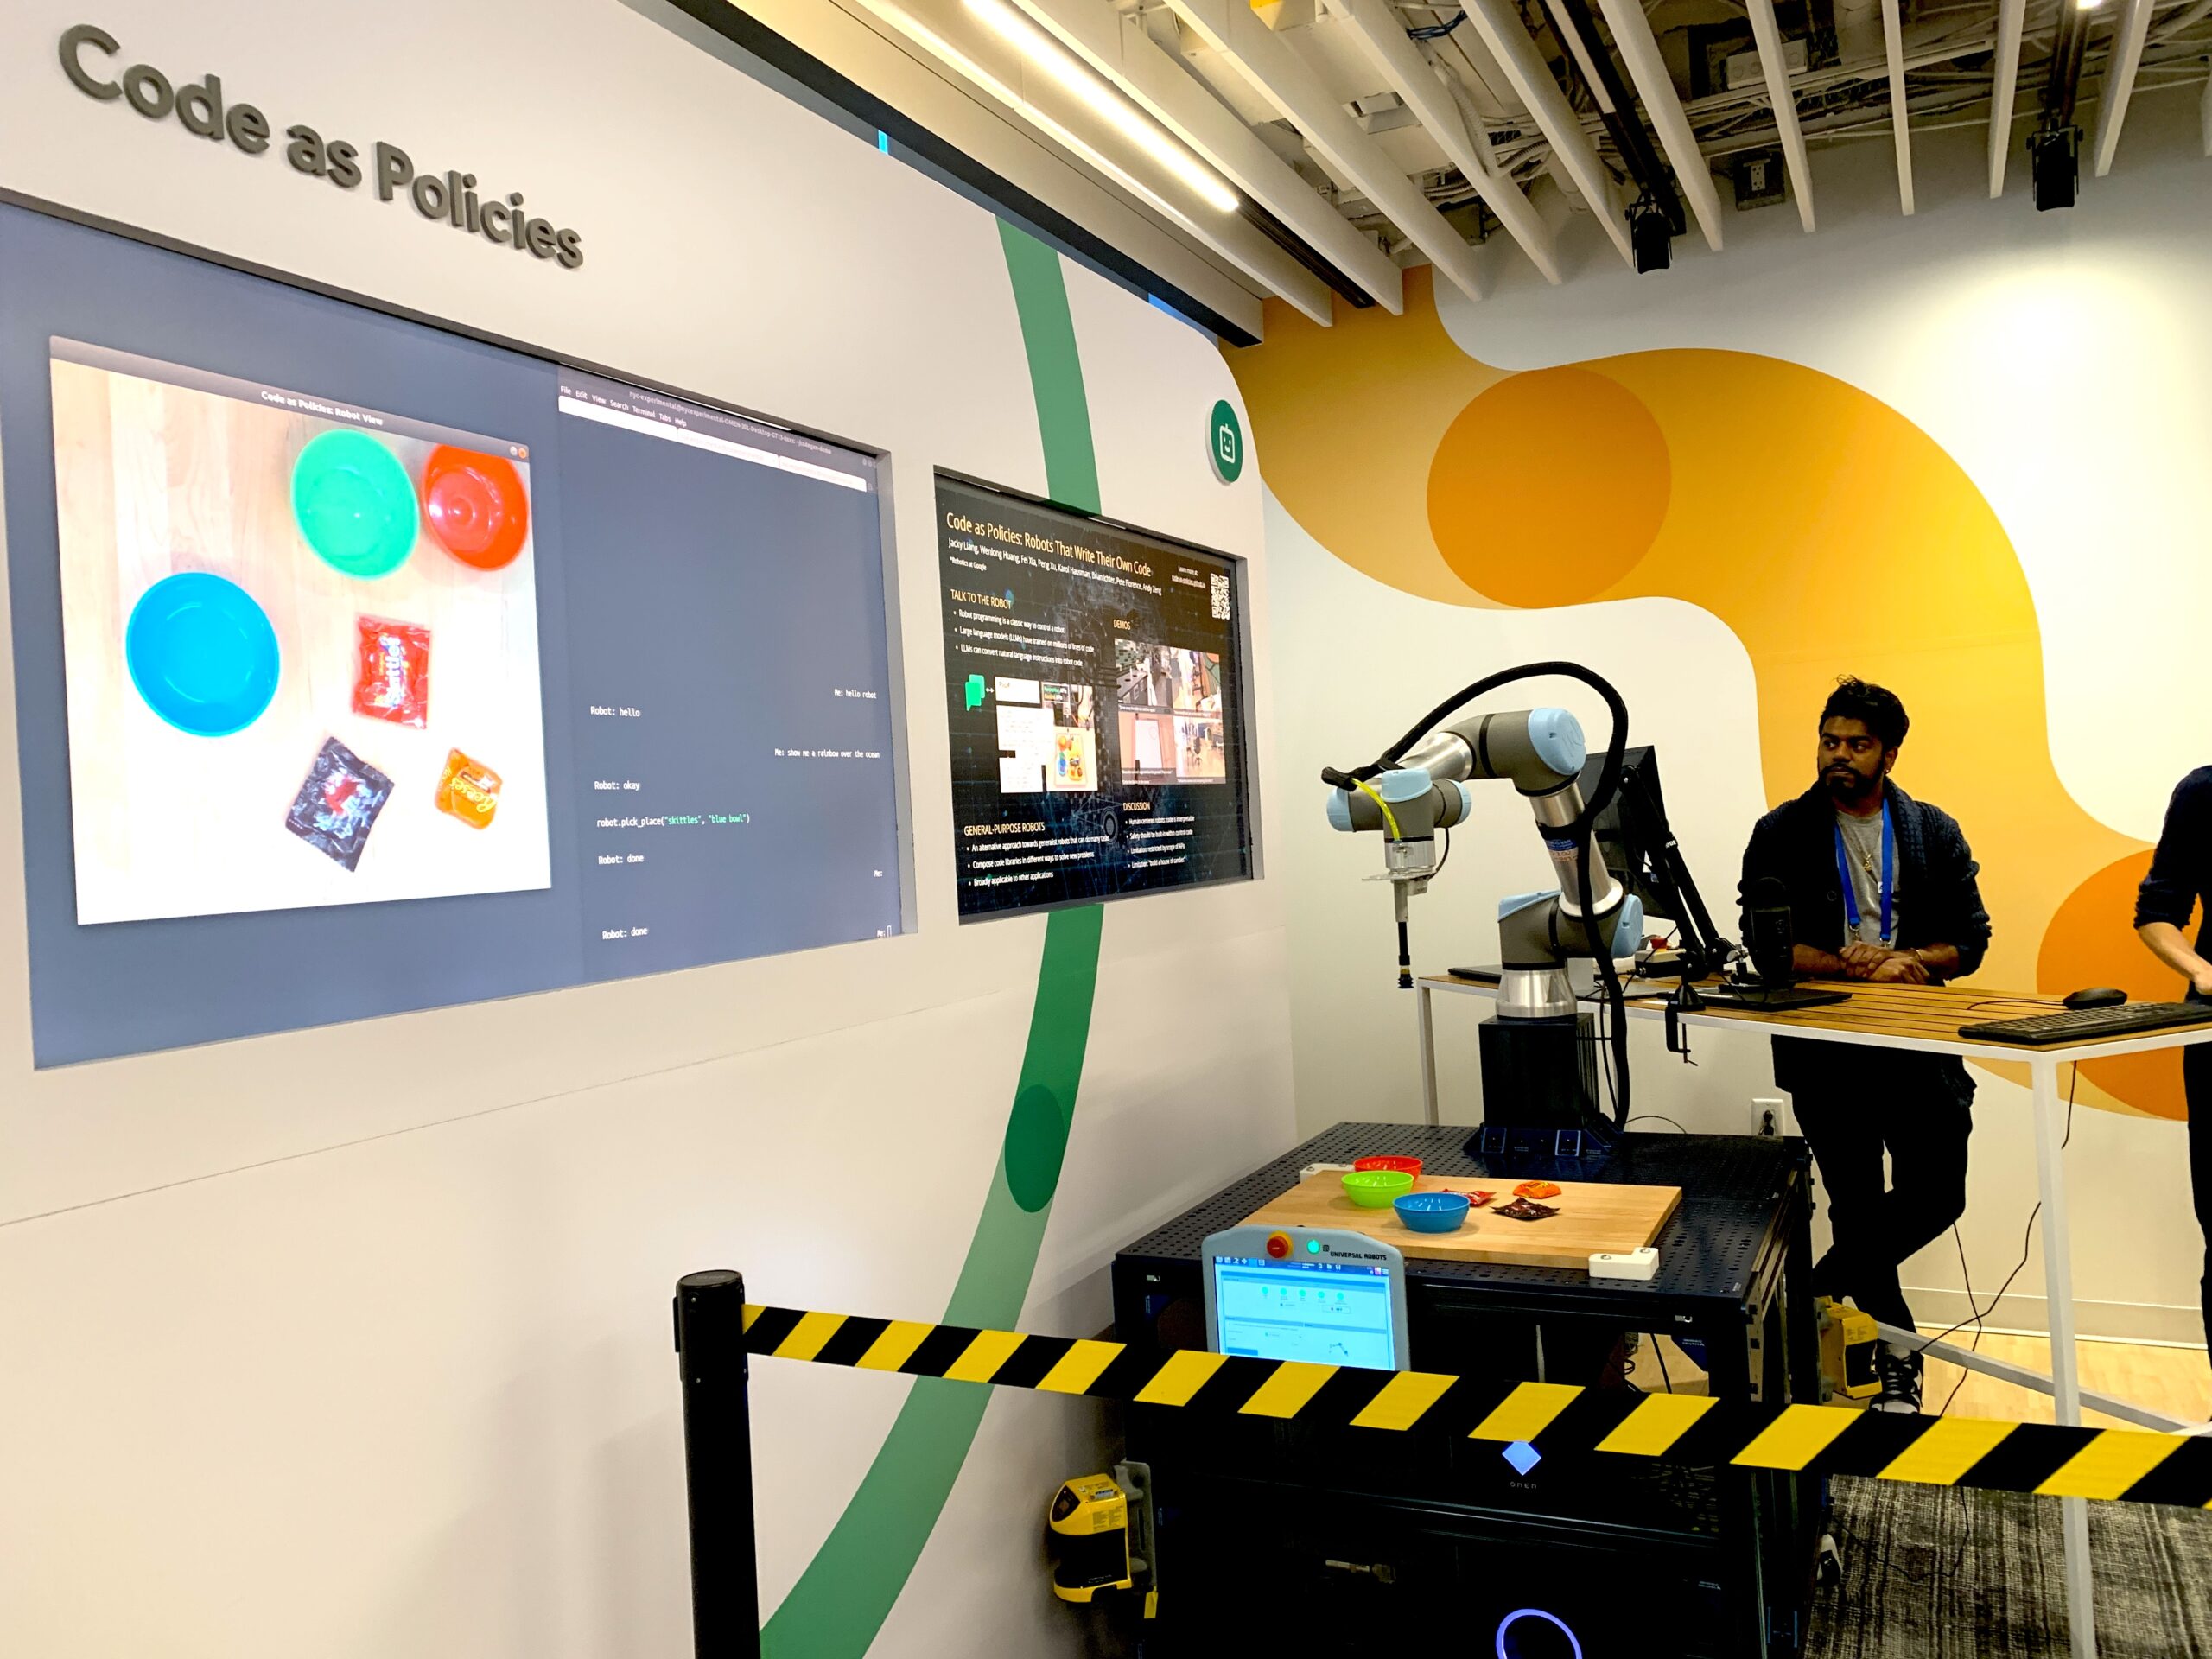 Code as Policies robot demo at Google AI event